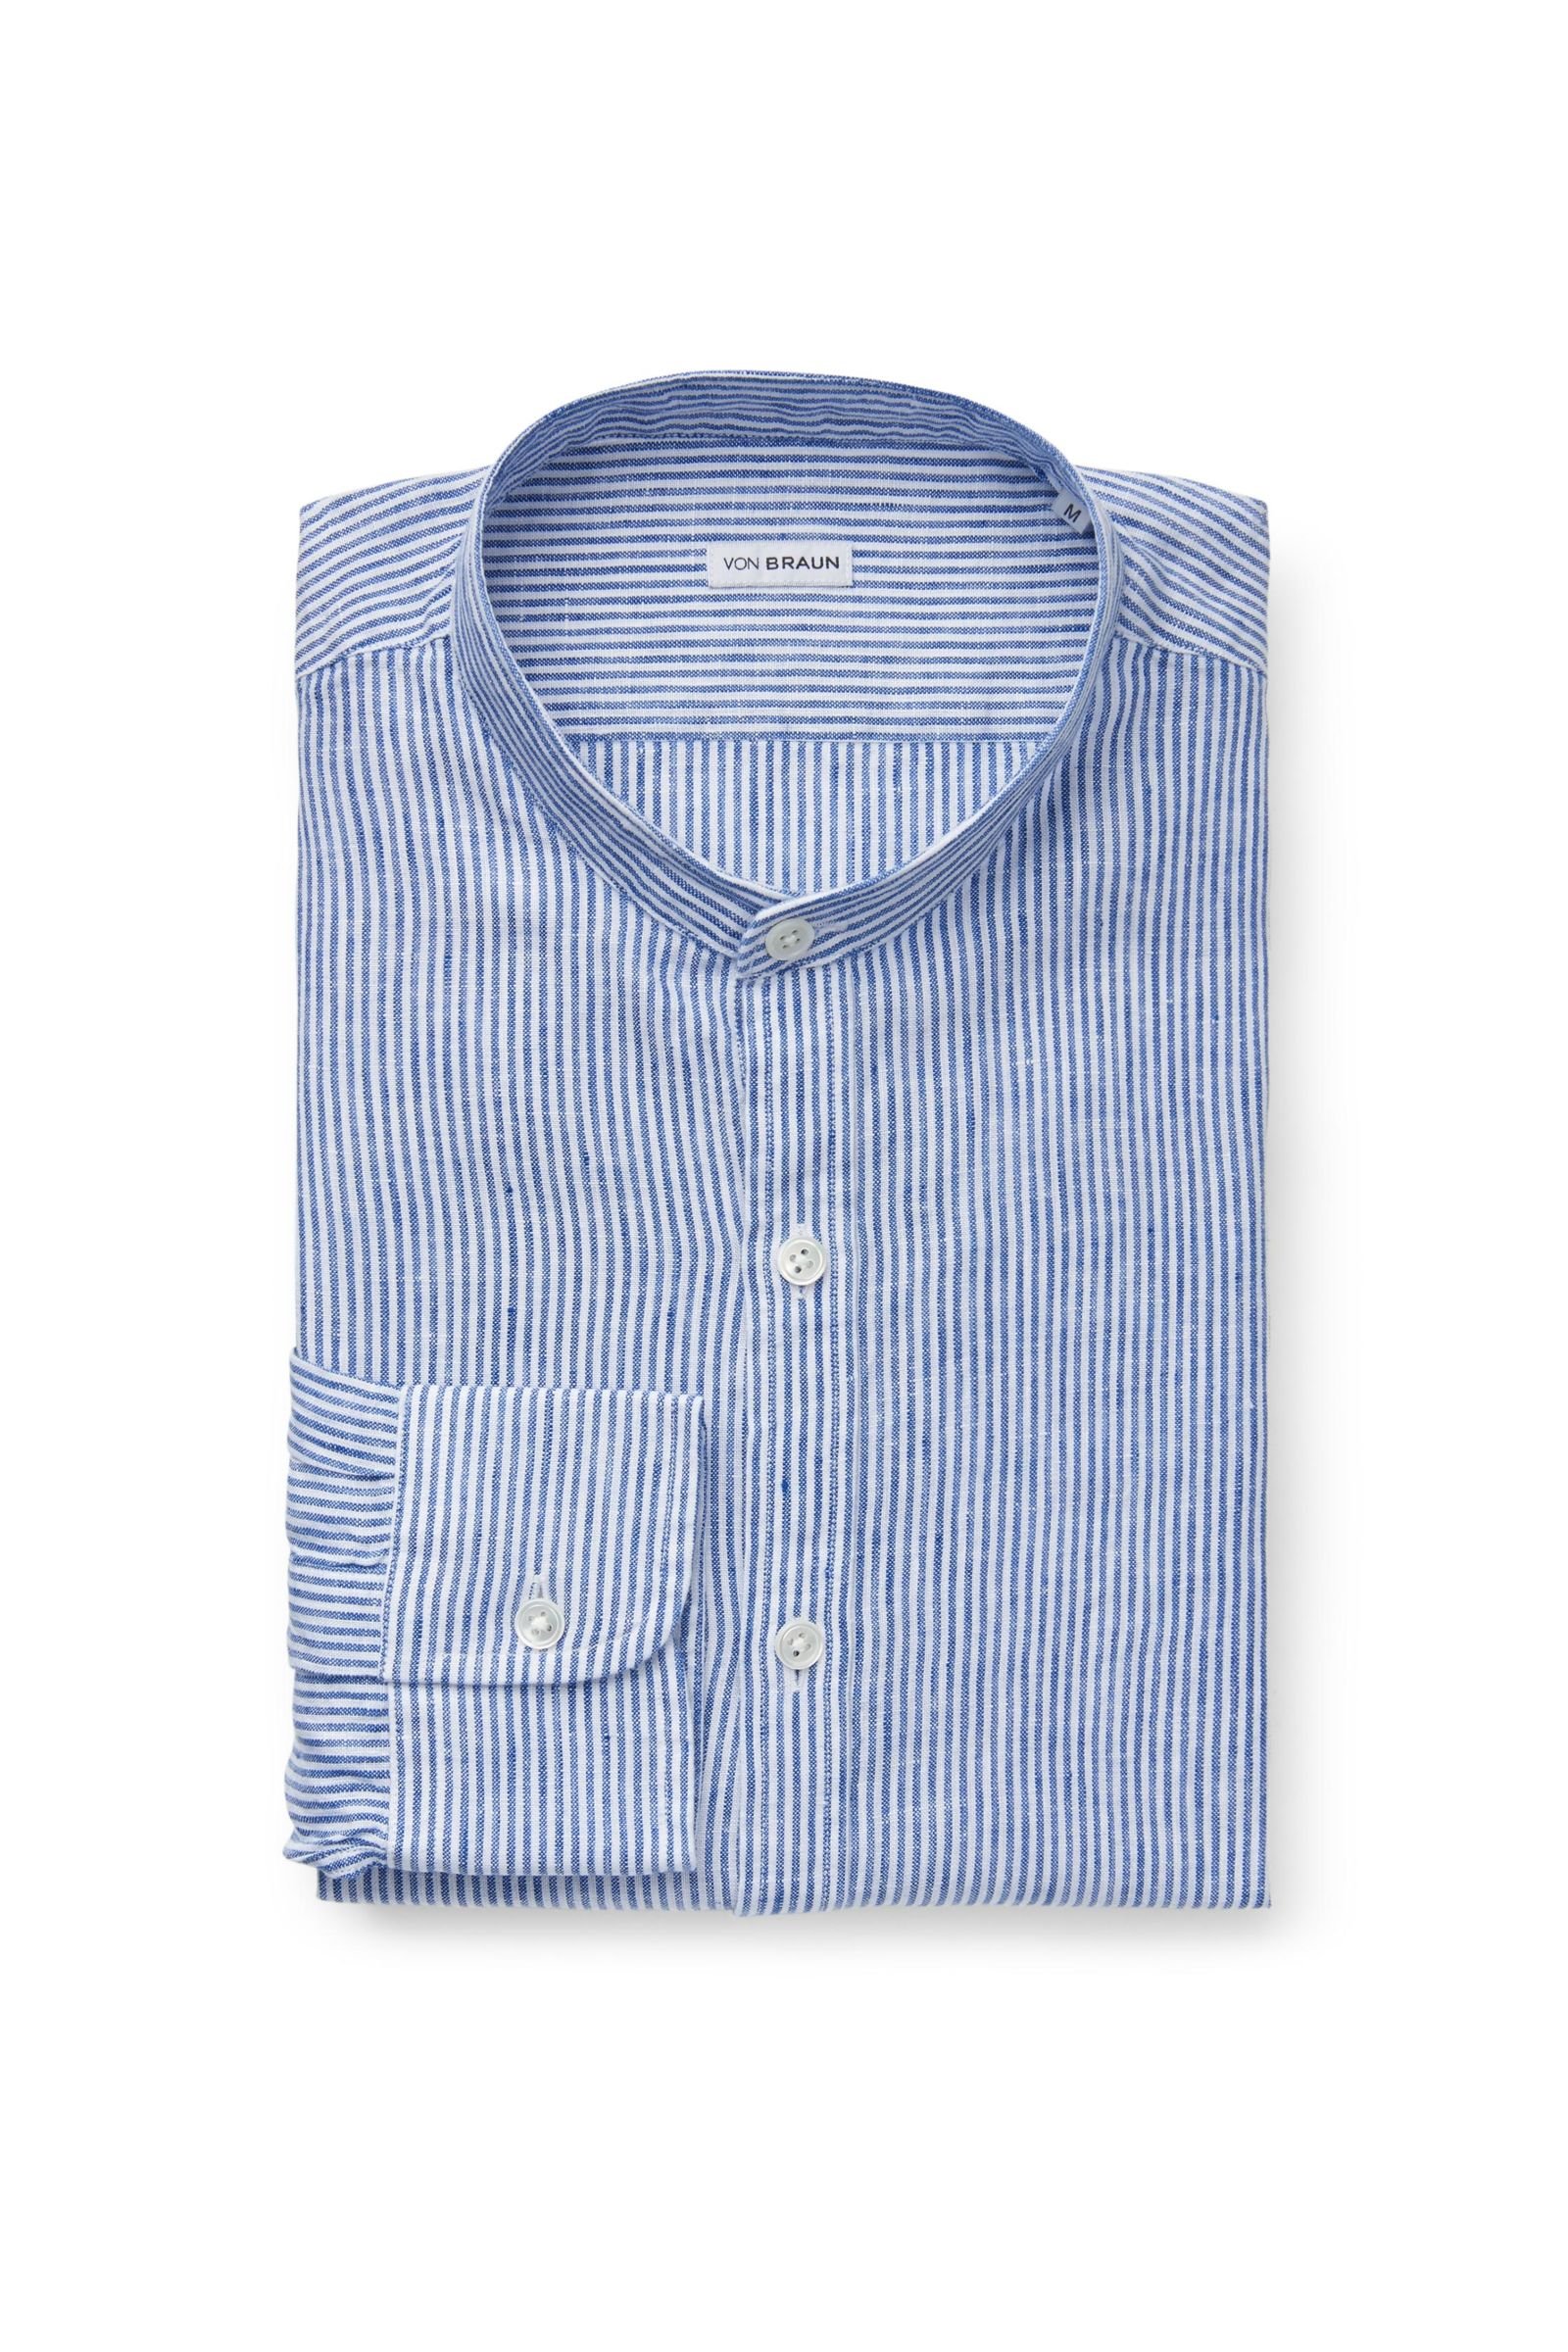 Linen shirt grandad collar grey-blue striped